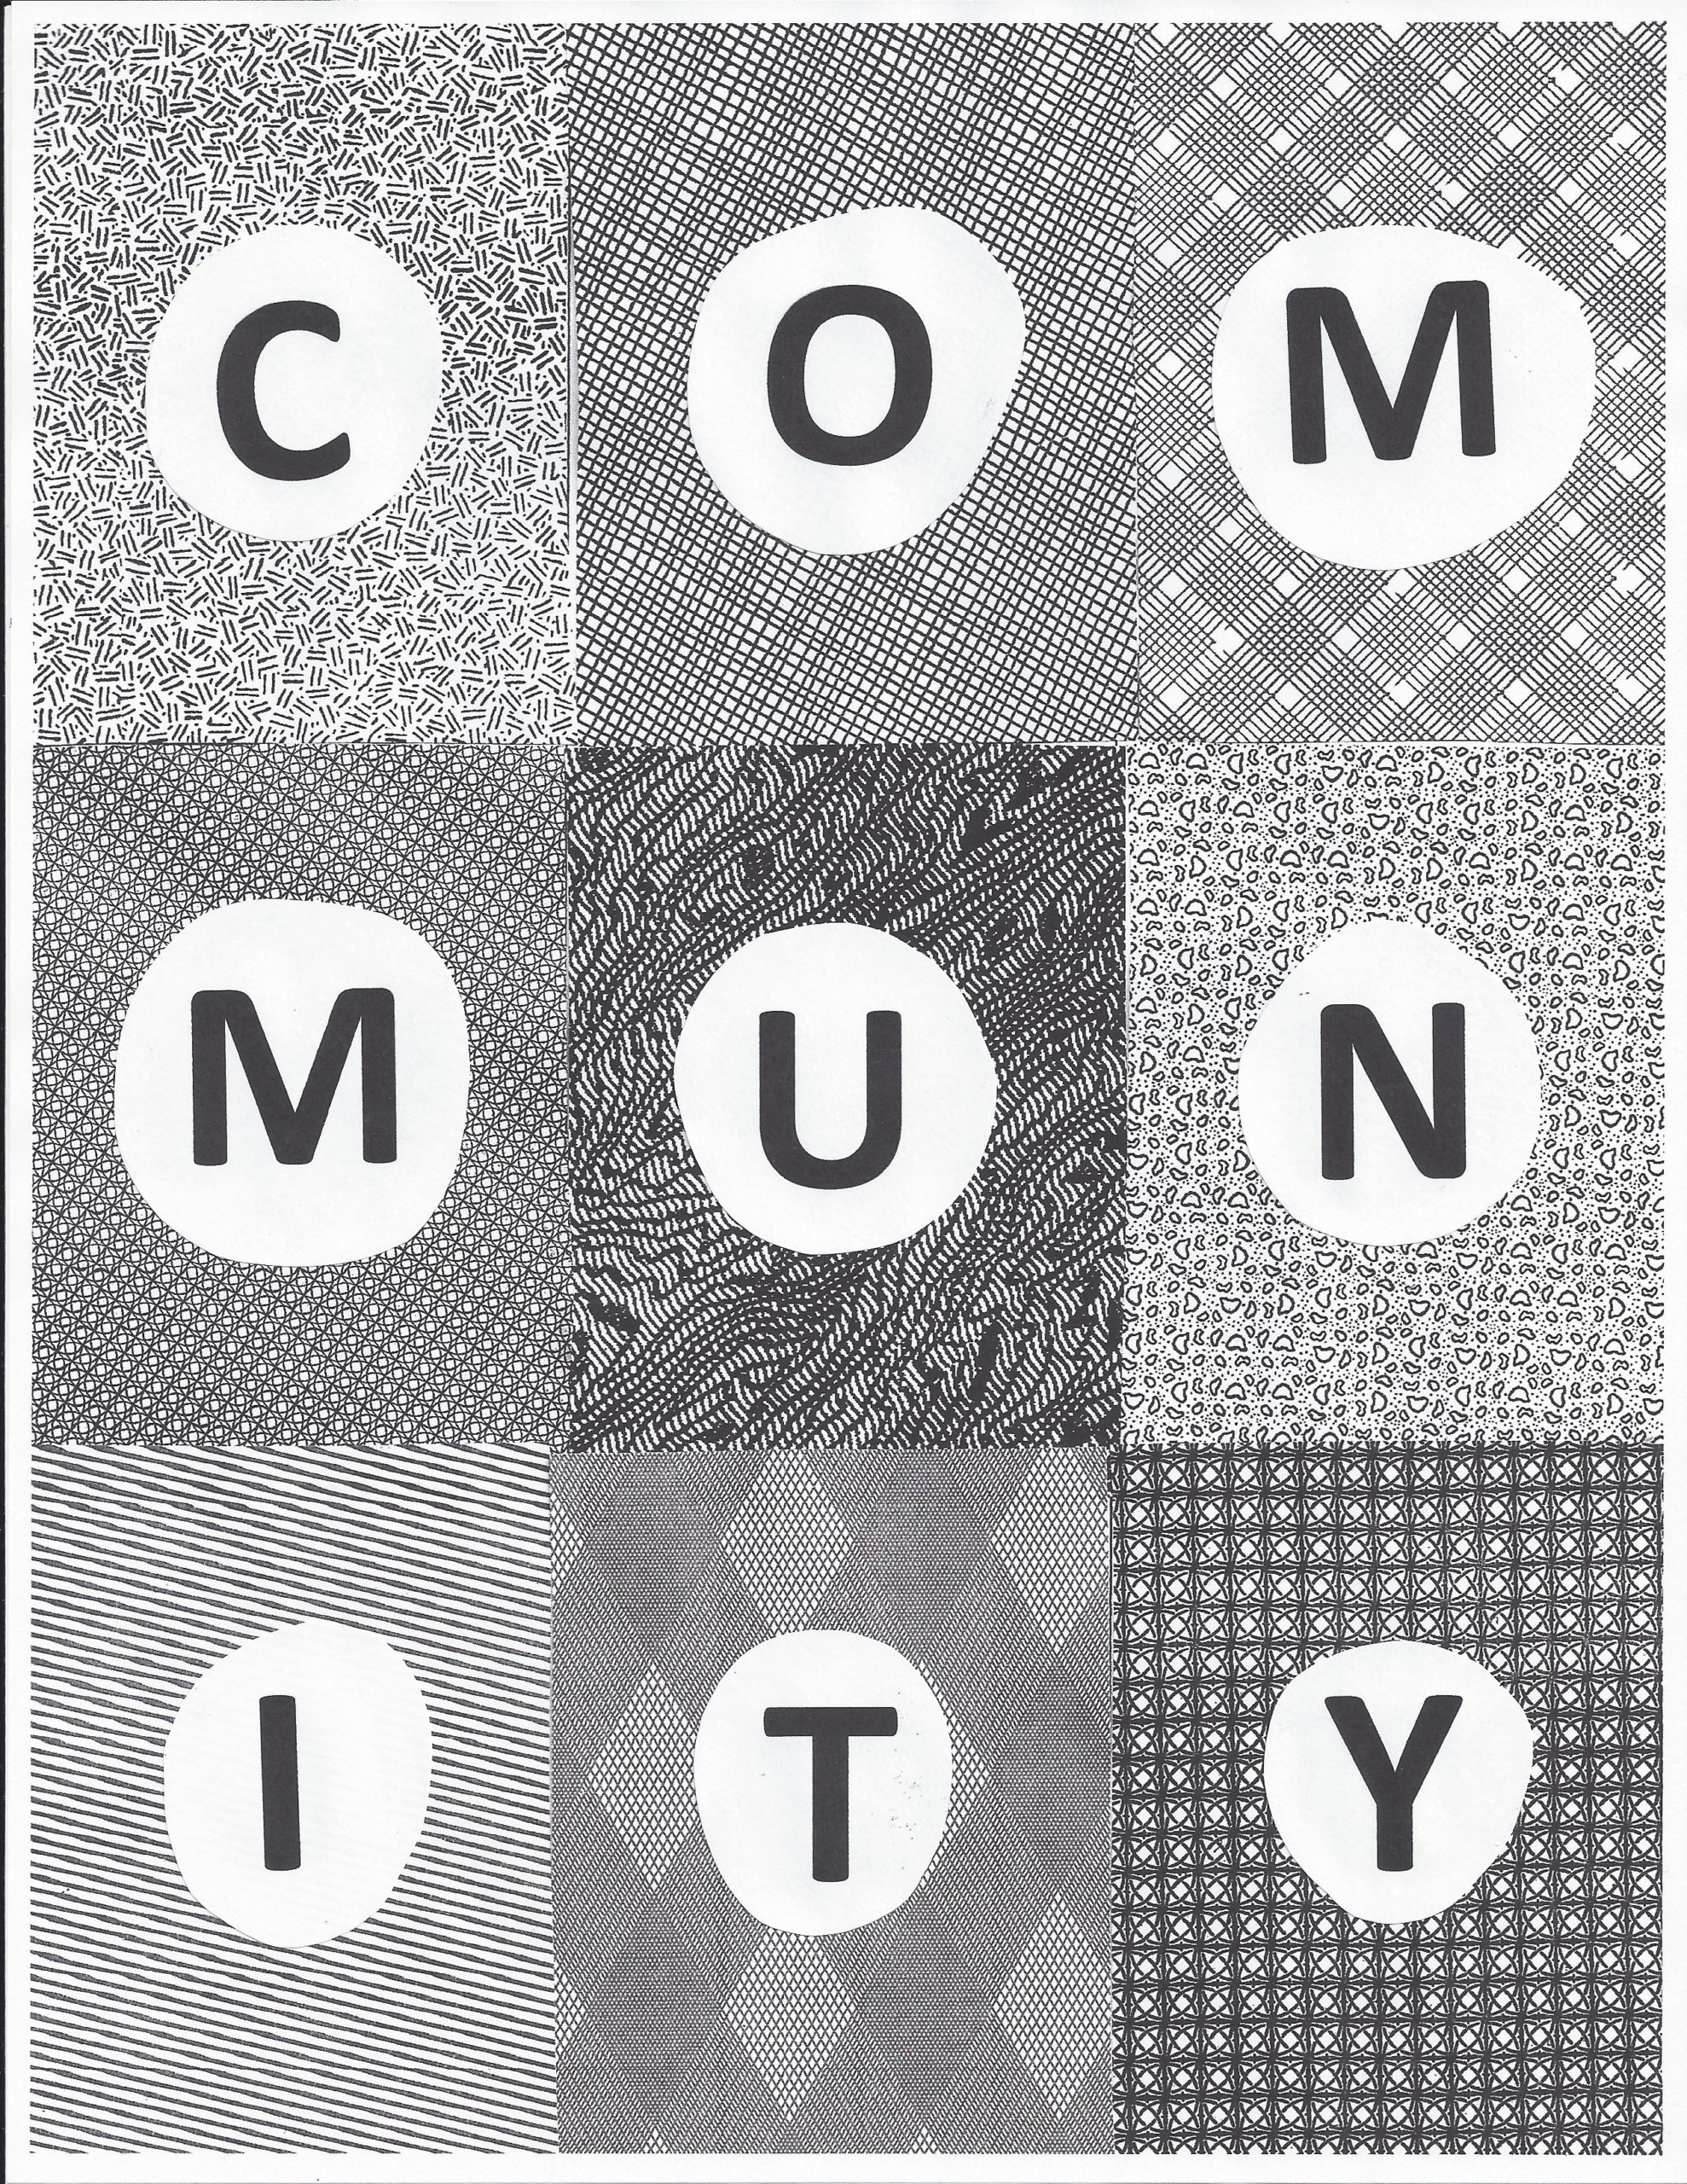 Planting COMMUNITY: A Participatory Art Project